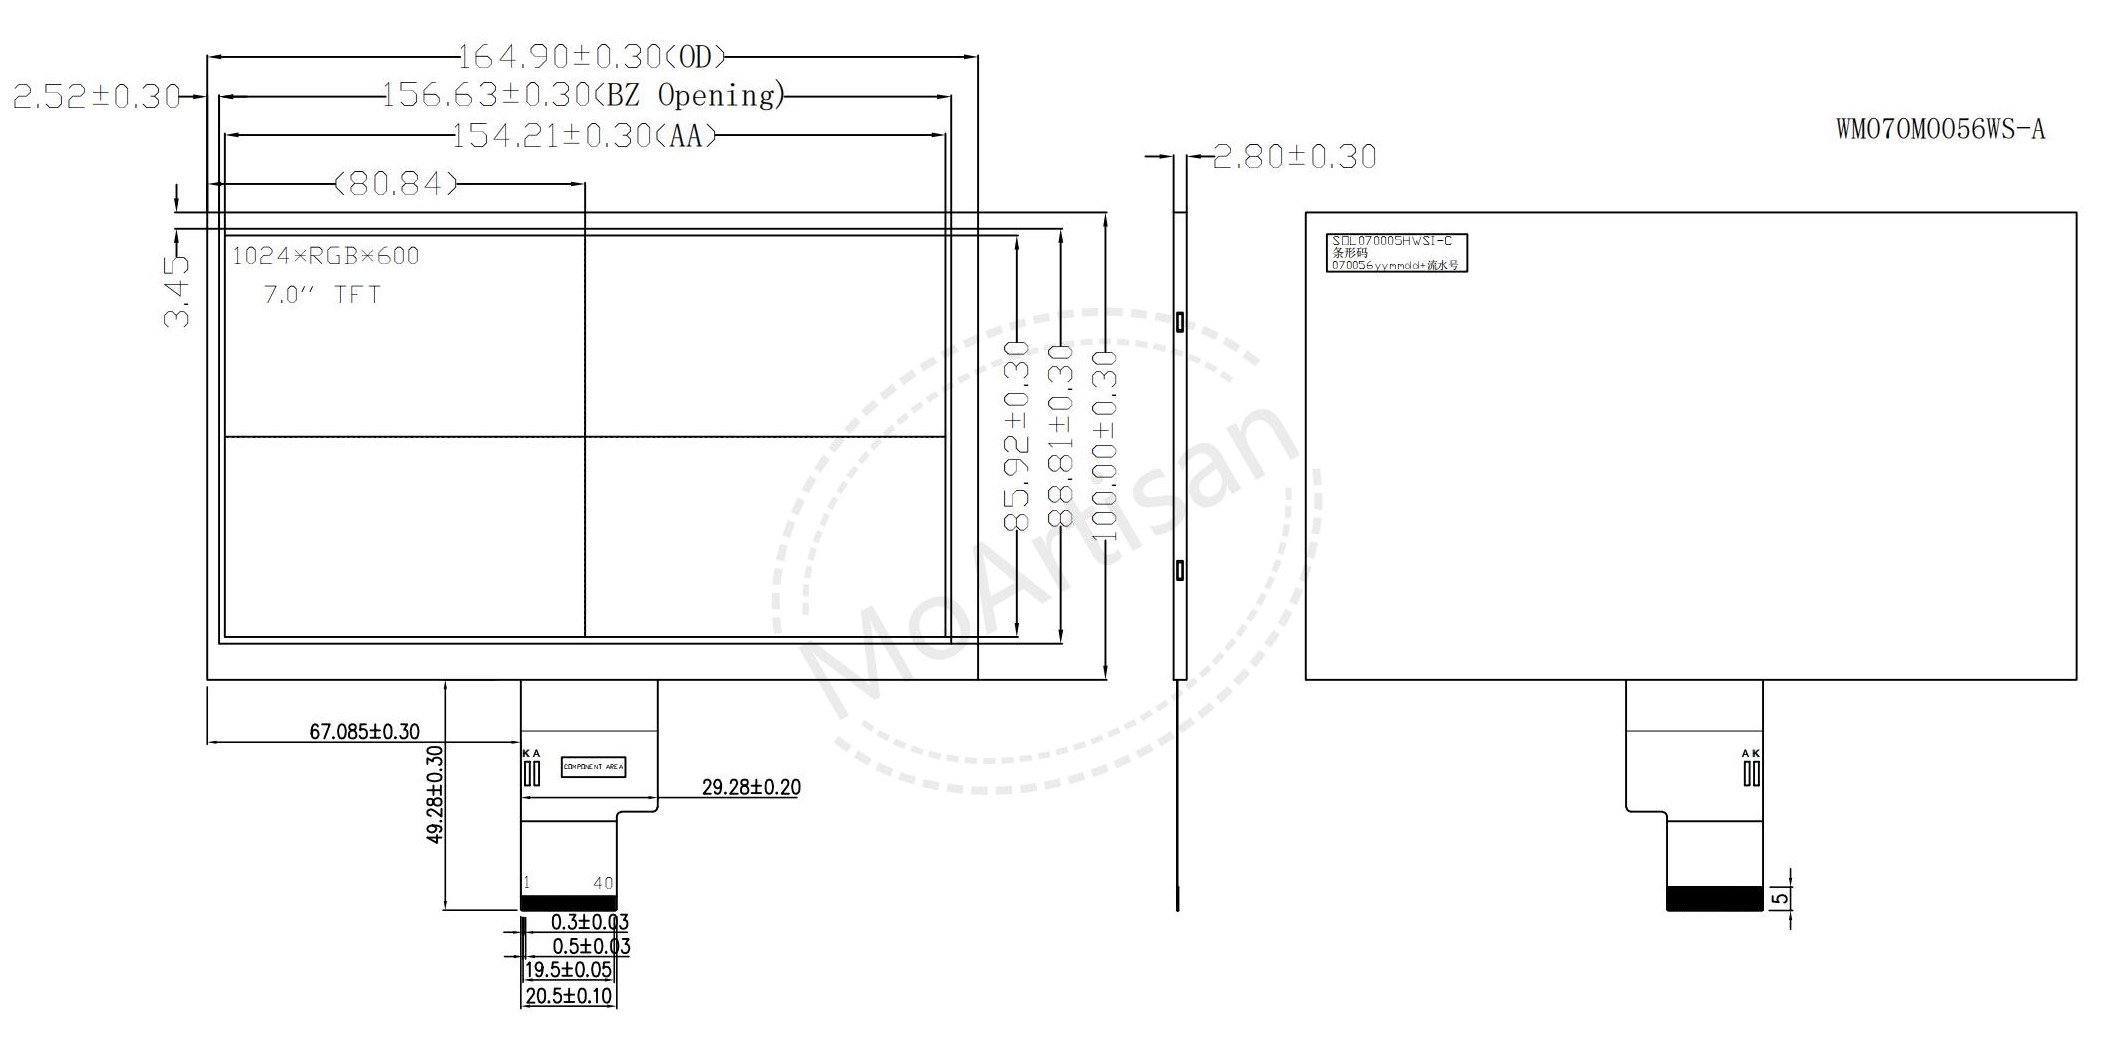 7.0 Inch ips 1024(RGB)*600 display module 400 nits brightness drawing